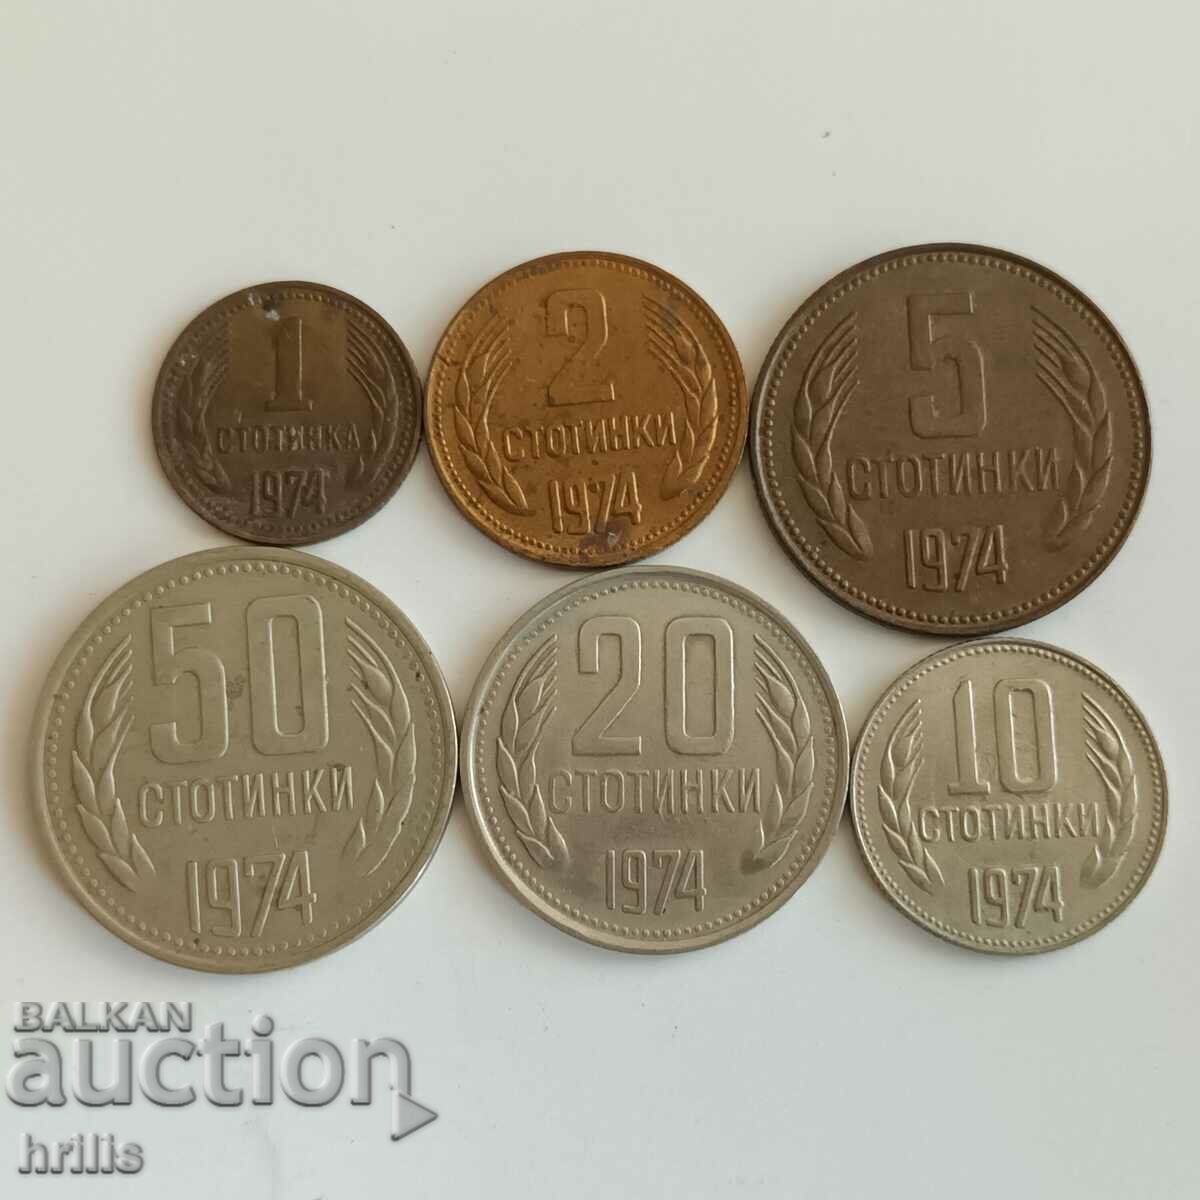 BULGARIA 1974 - 1, 2, 5, 10, 20, 50 CENTS SET 2